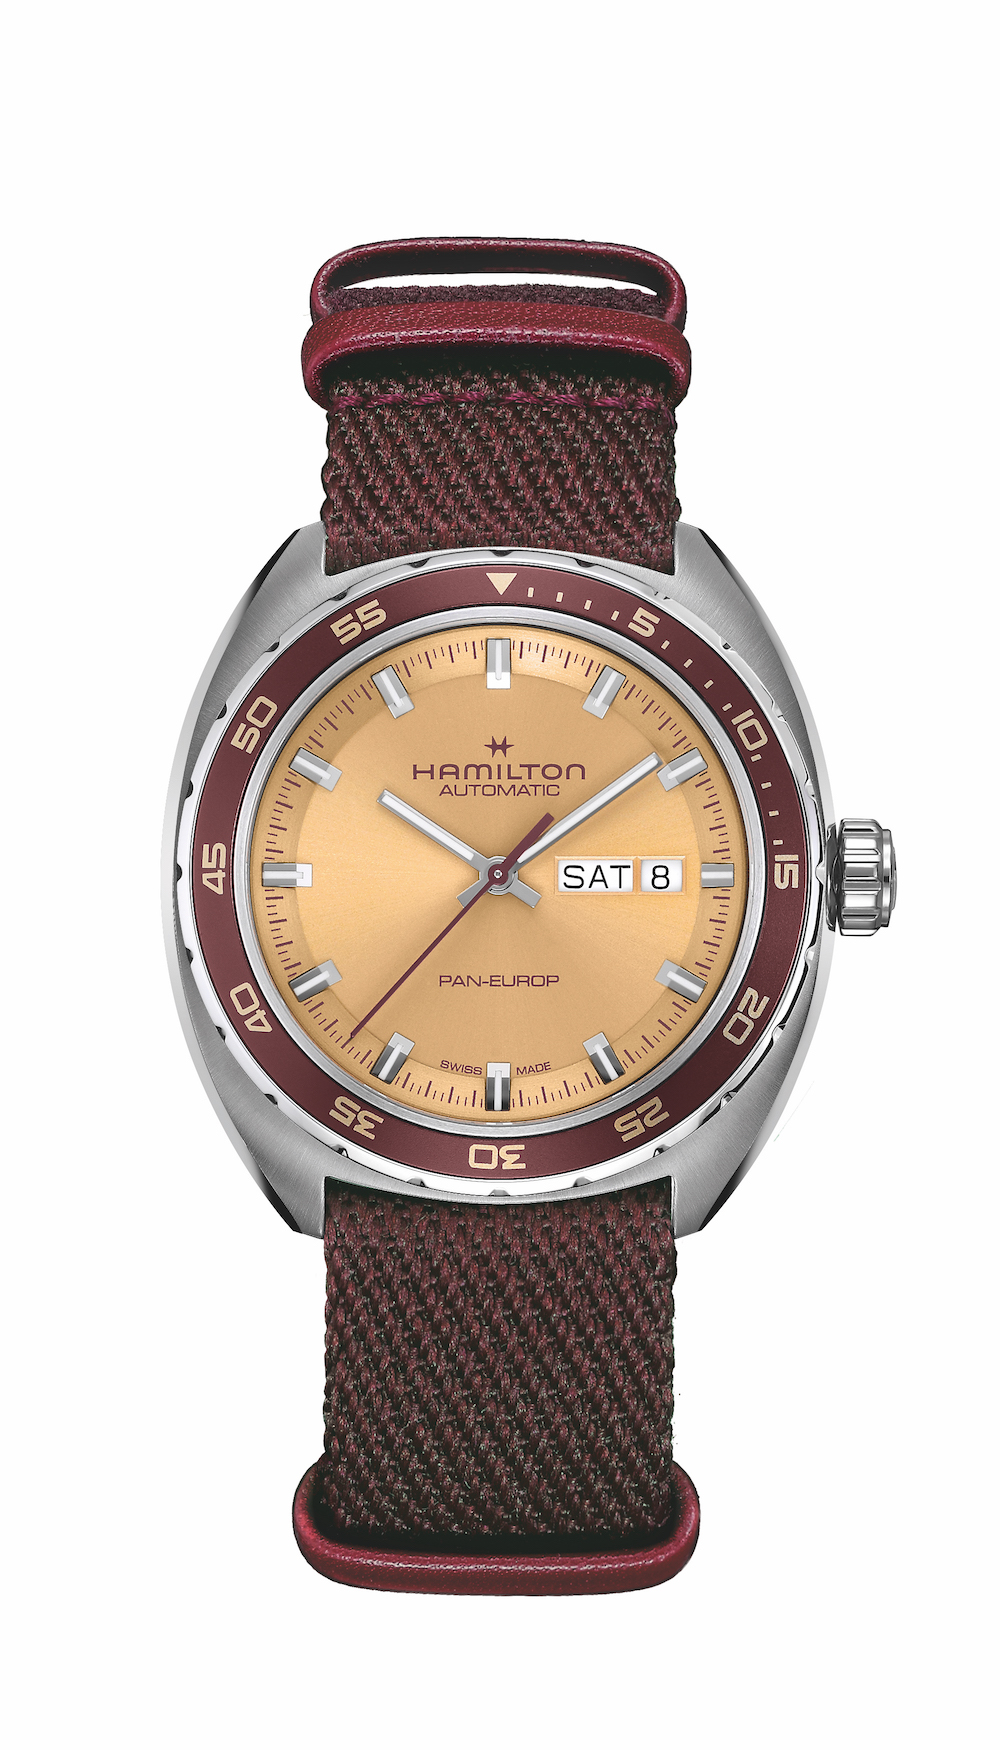 imagen 11 de Pan Europ de Hamilton, relojes de inspiración vintage.